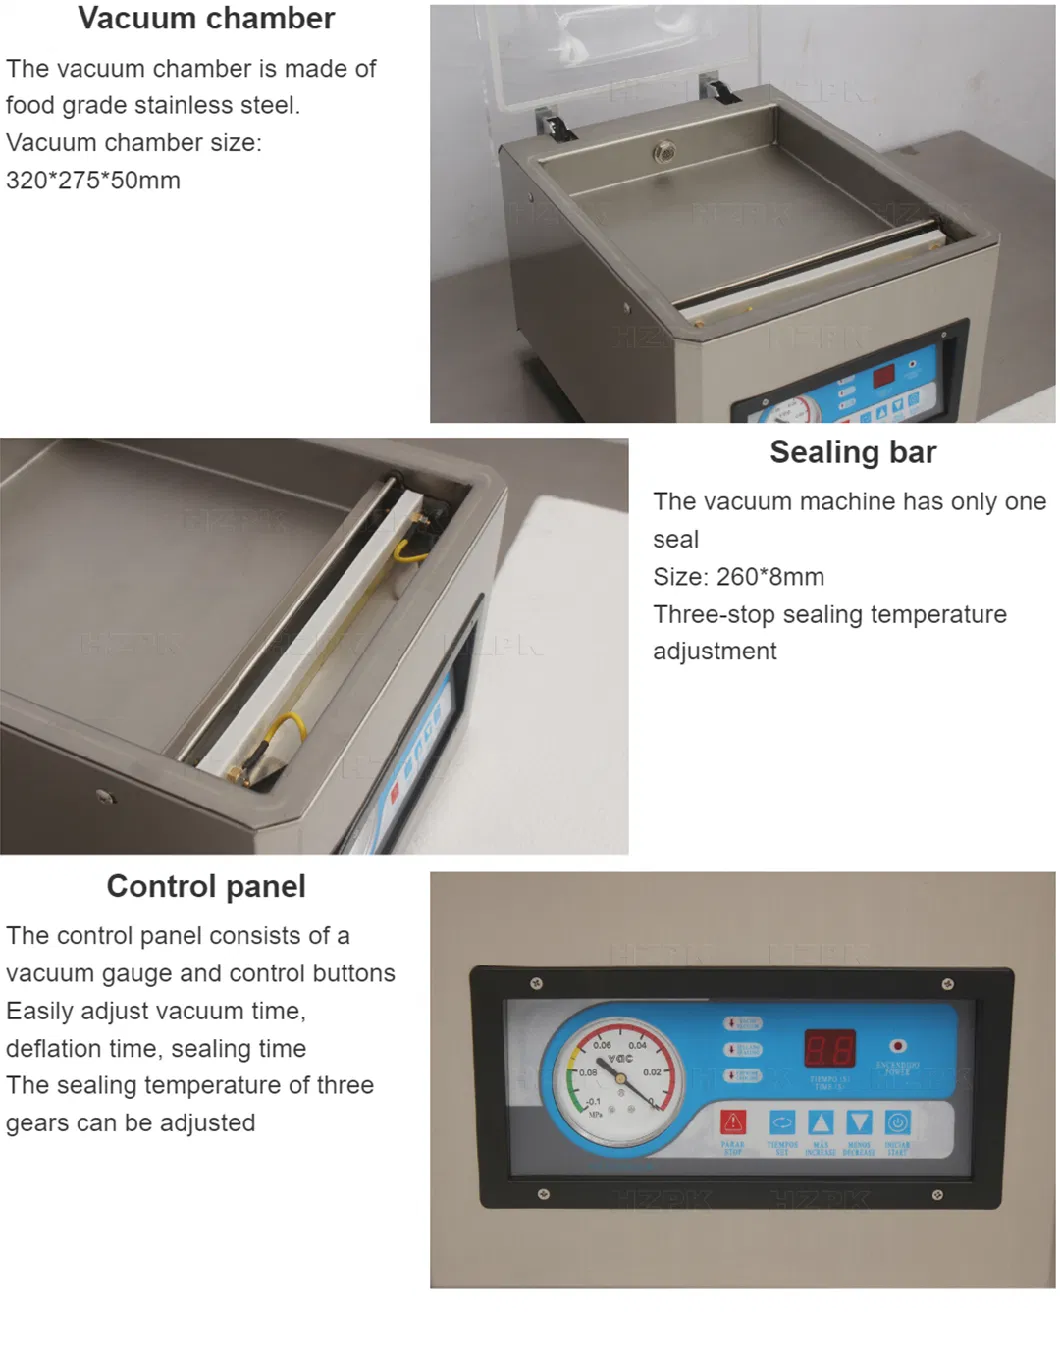 Hzpk Commercial Vacuum Packaging Machine for Meat Desktop Single Chamber Vacuum Machine